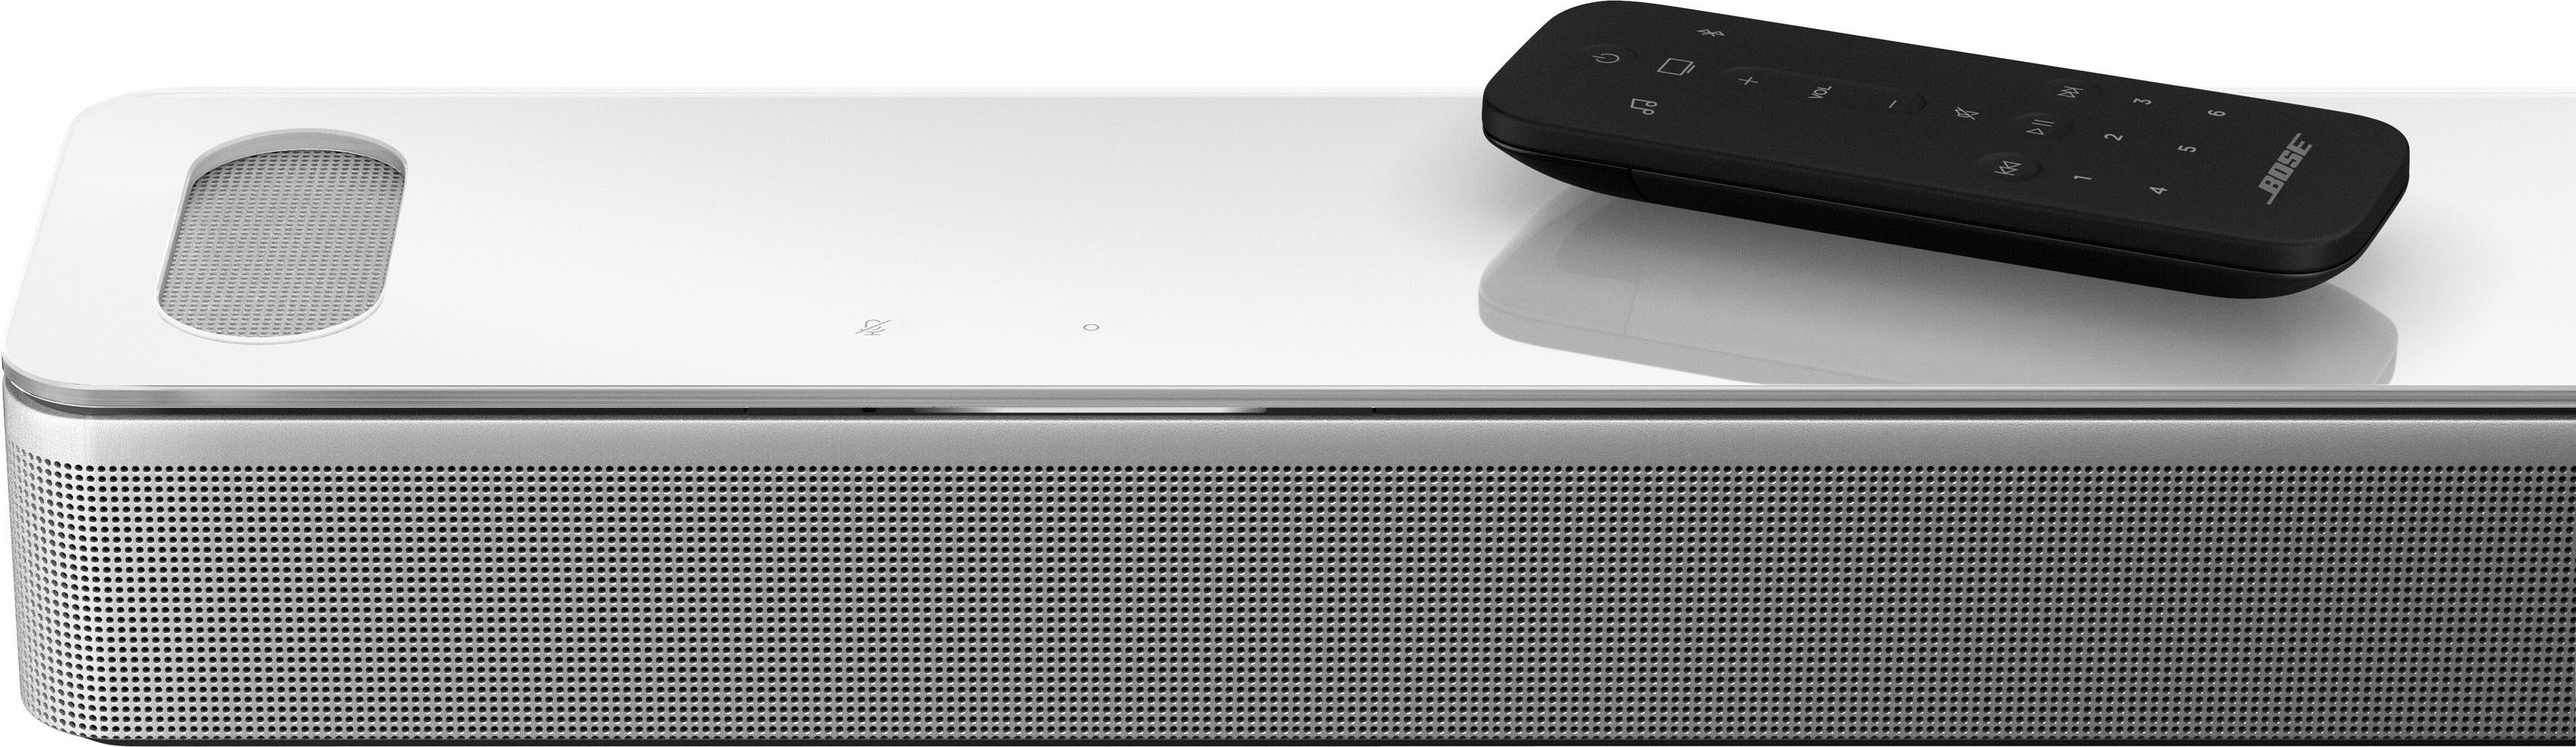 Bose Smart Soundbar 900 Alexa (Ethernet), Soundbar mit weiß Assistant) (Bluetooth, LAN Amazon und Google